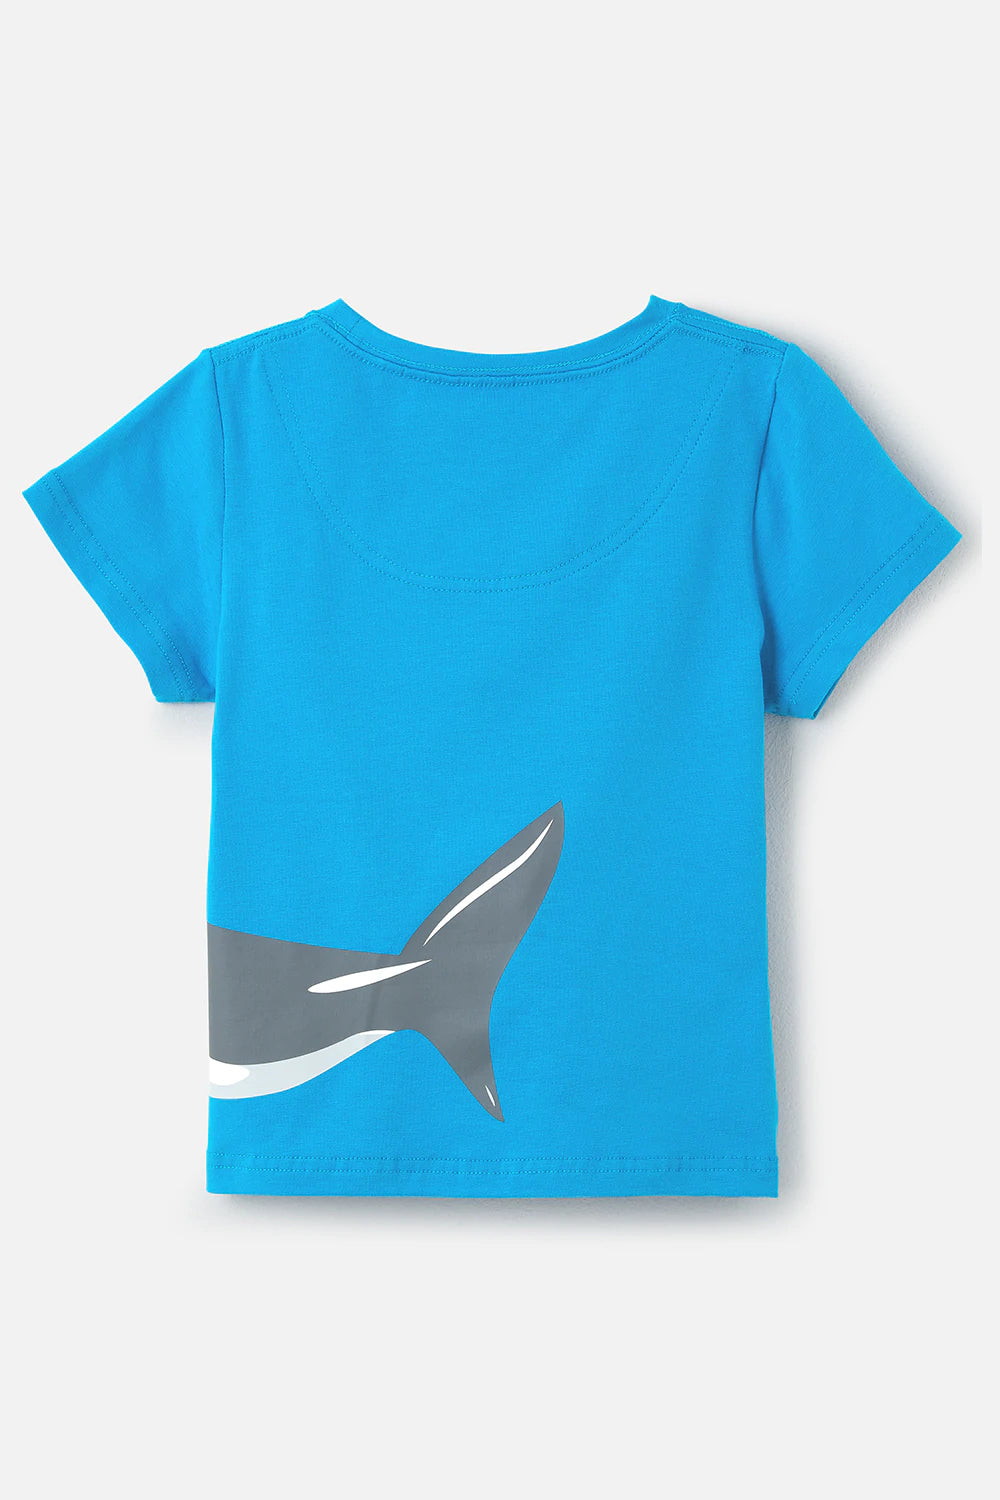 Lighthouse Boys Oliver T-Shirt - Blue Shark